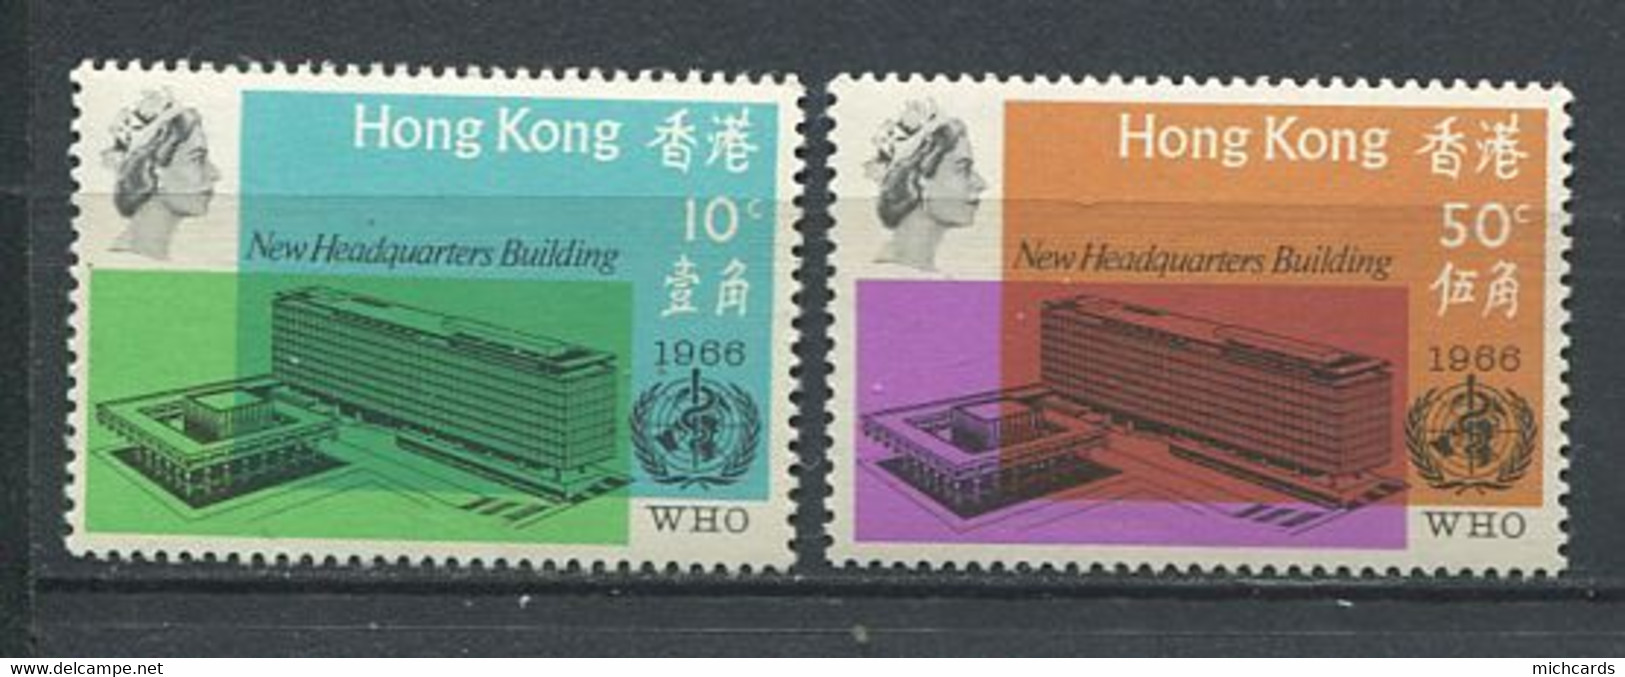 232 HONG KONG 1966 - Yvert 220/21 - Siege Sante A Geneve  - Neuf ** (MNH) Sans Trace De Charniere - Nuevos